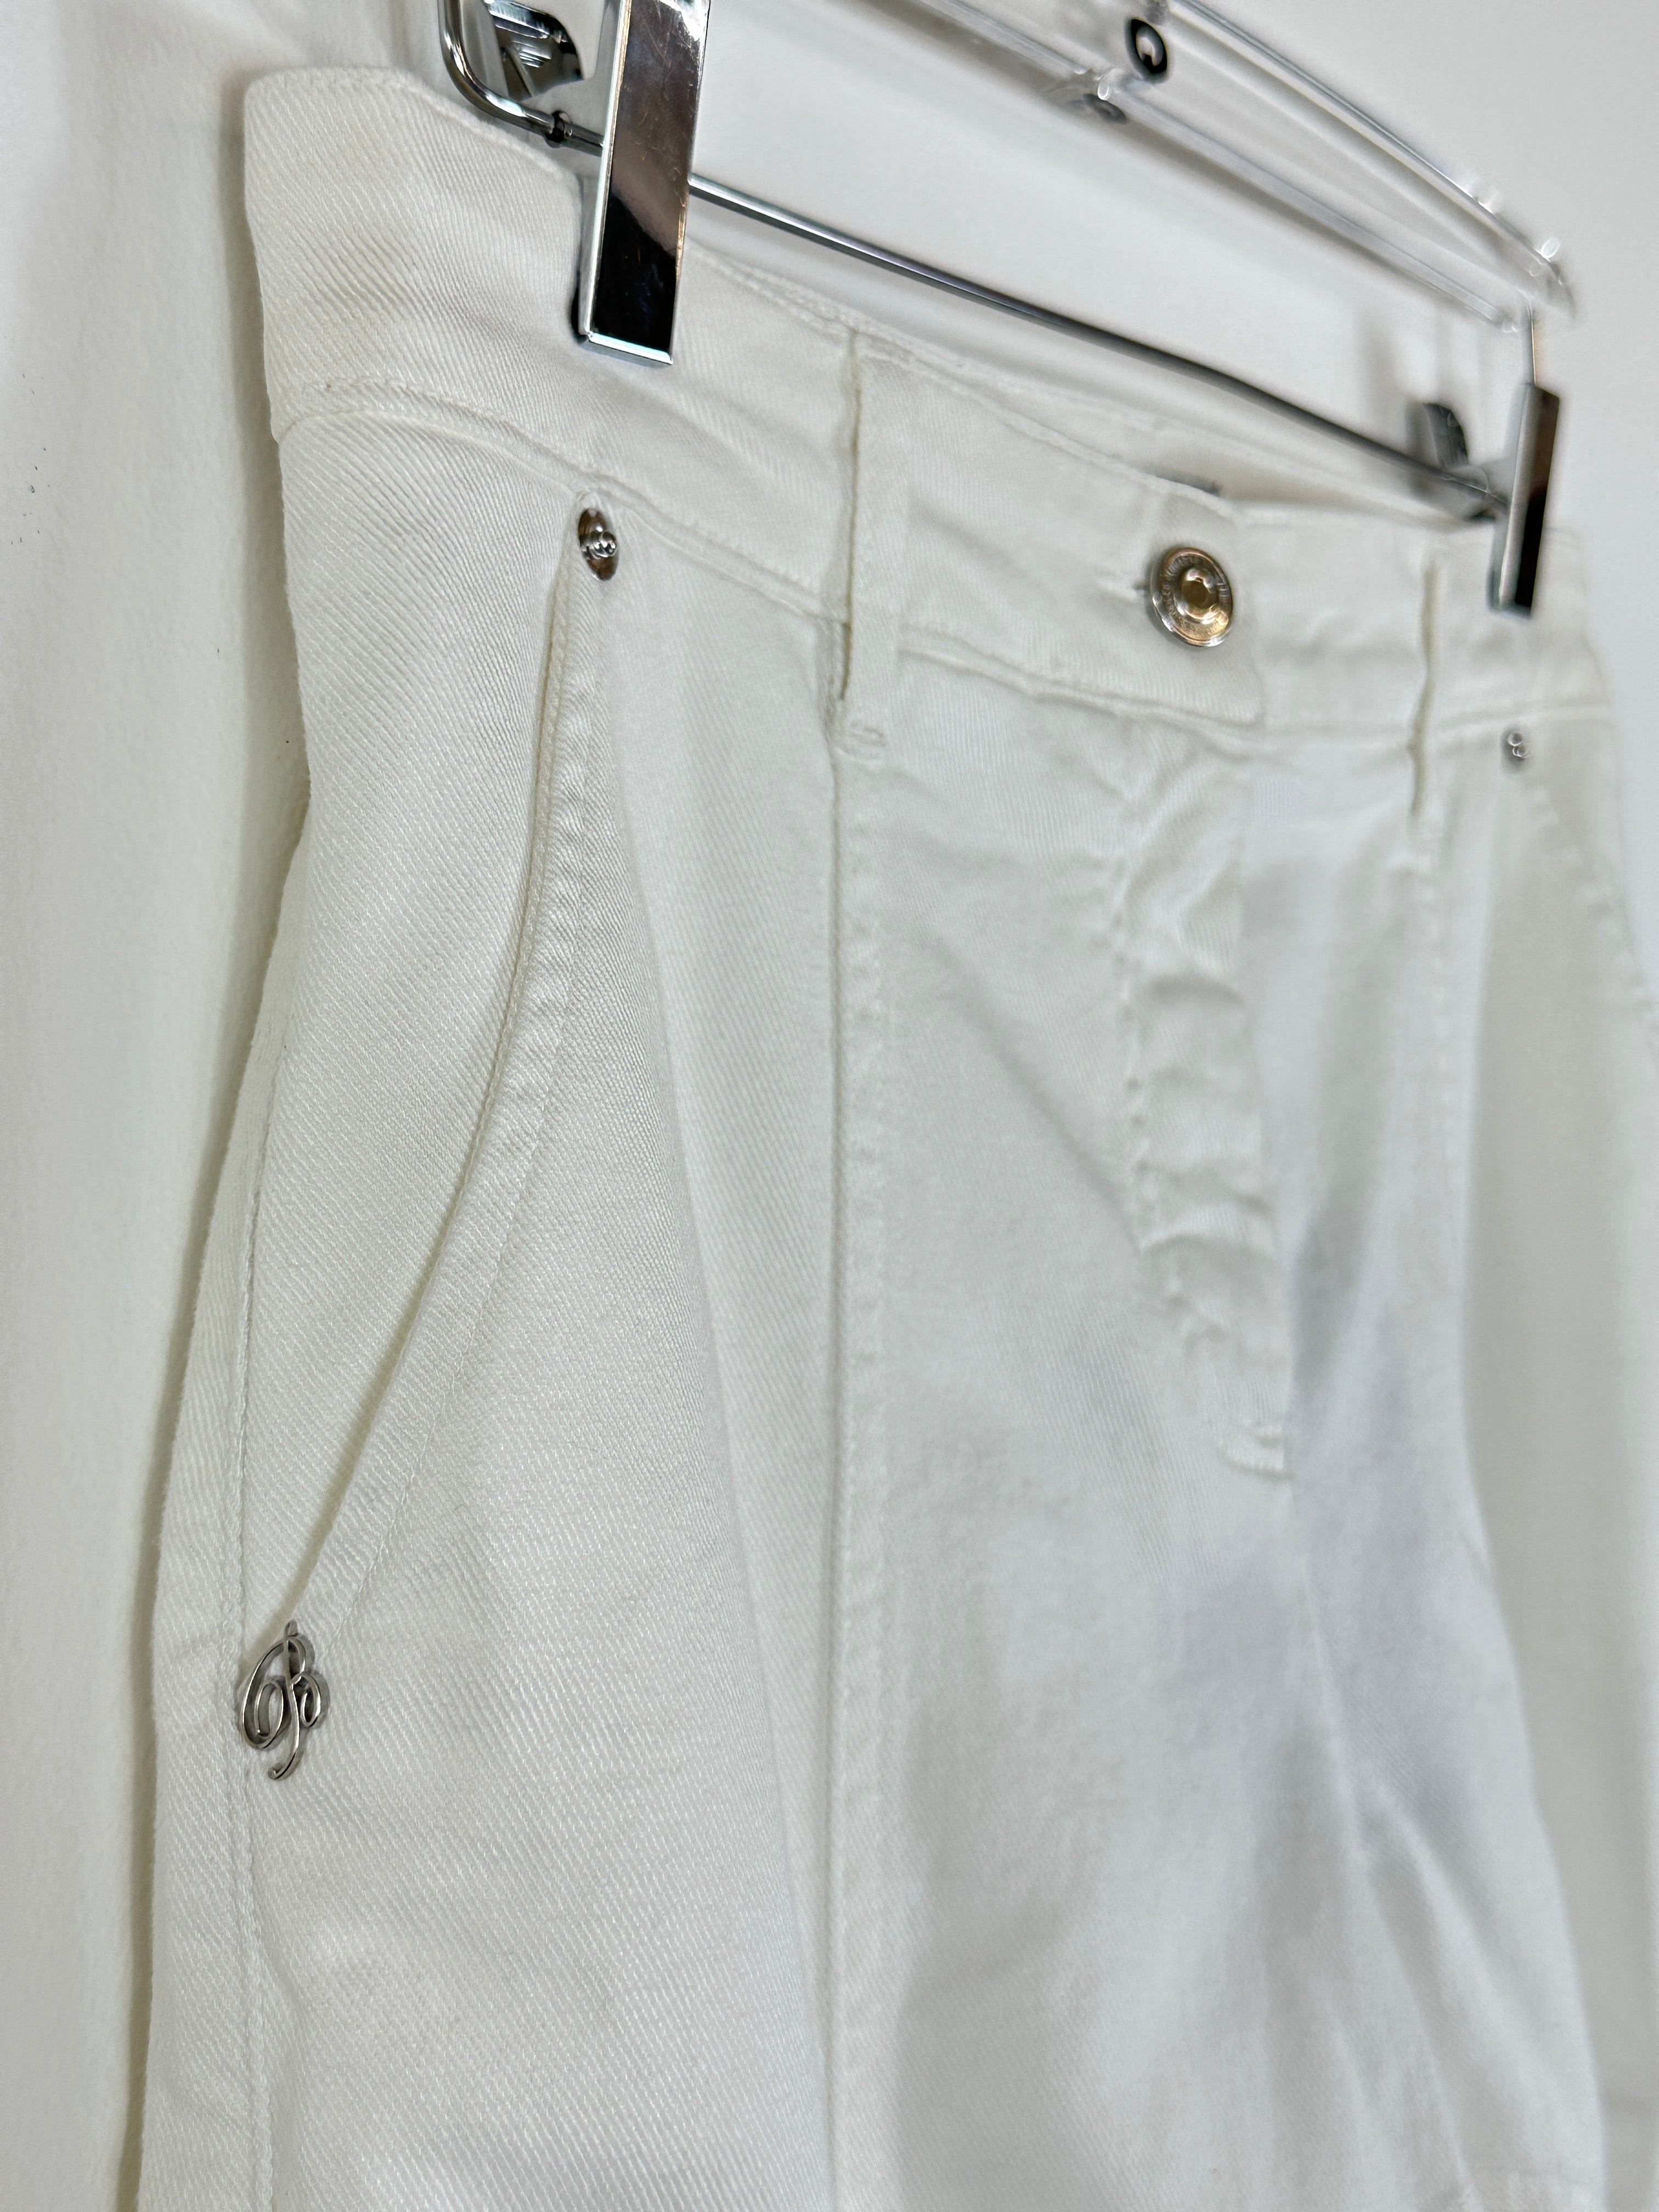 White Cargo Jeans